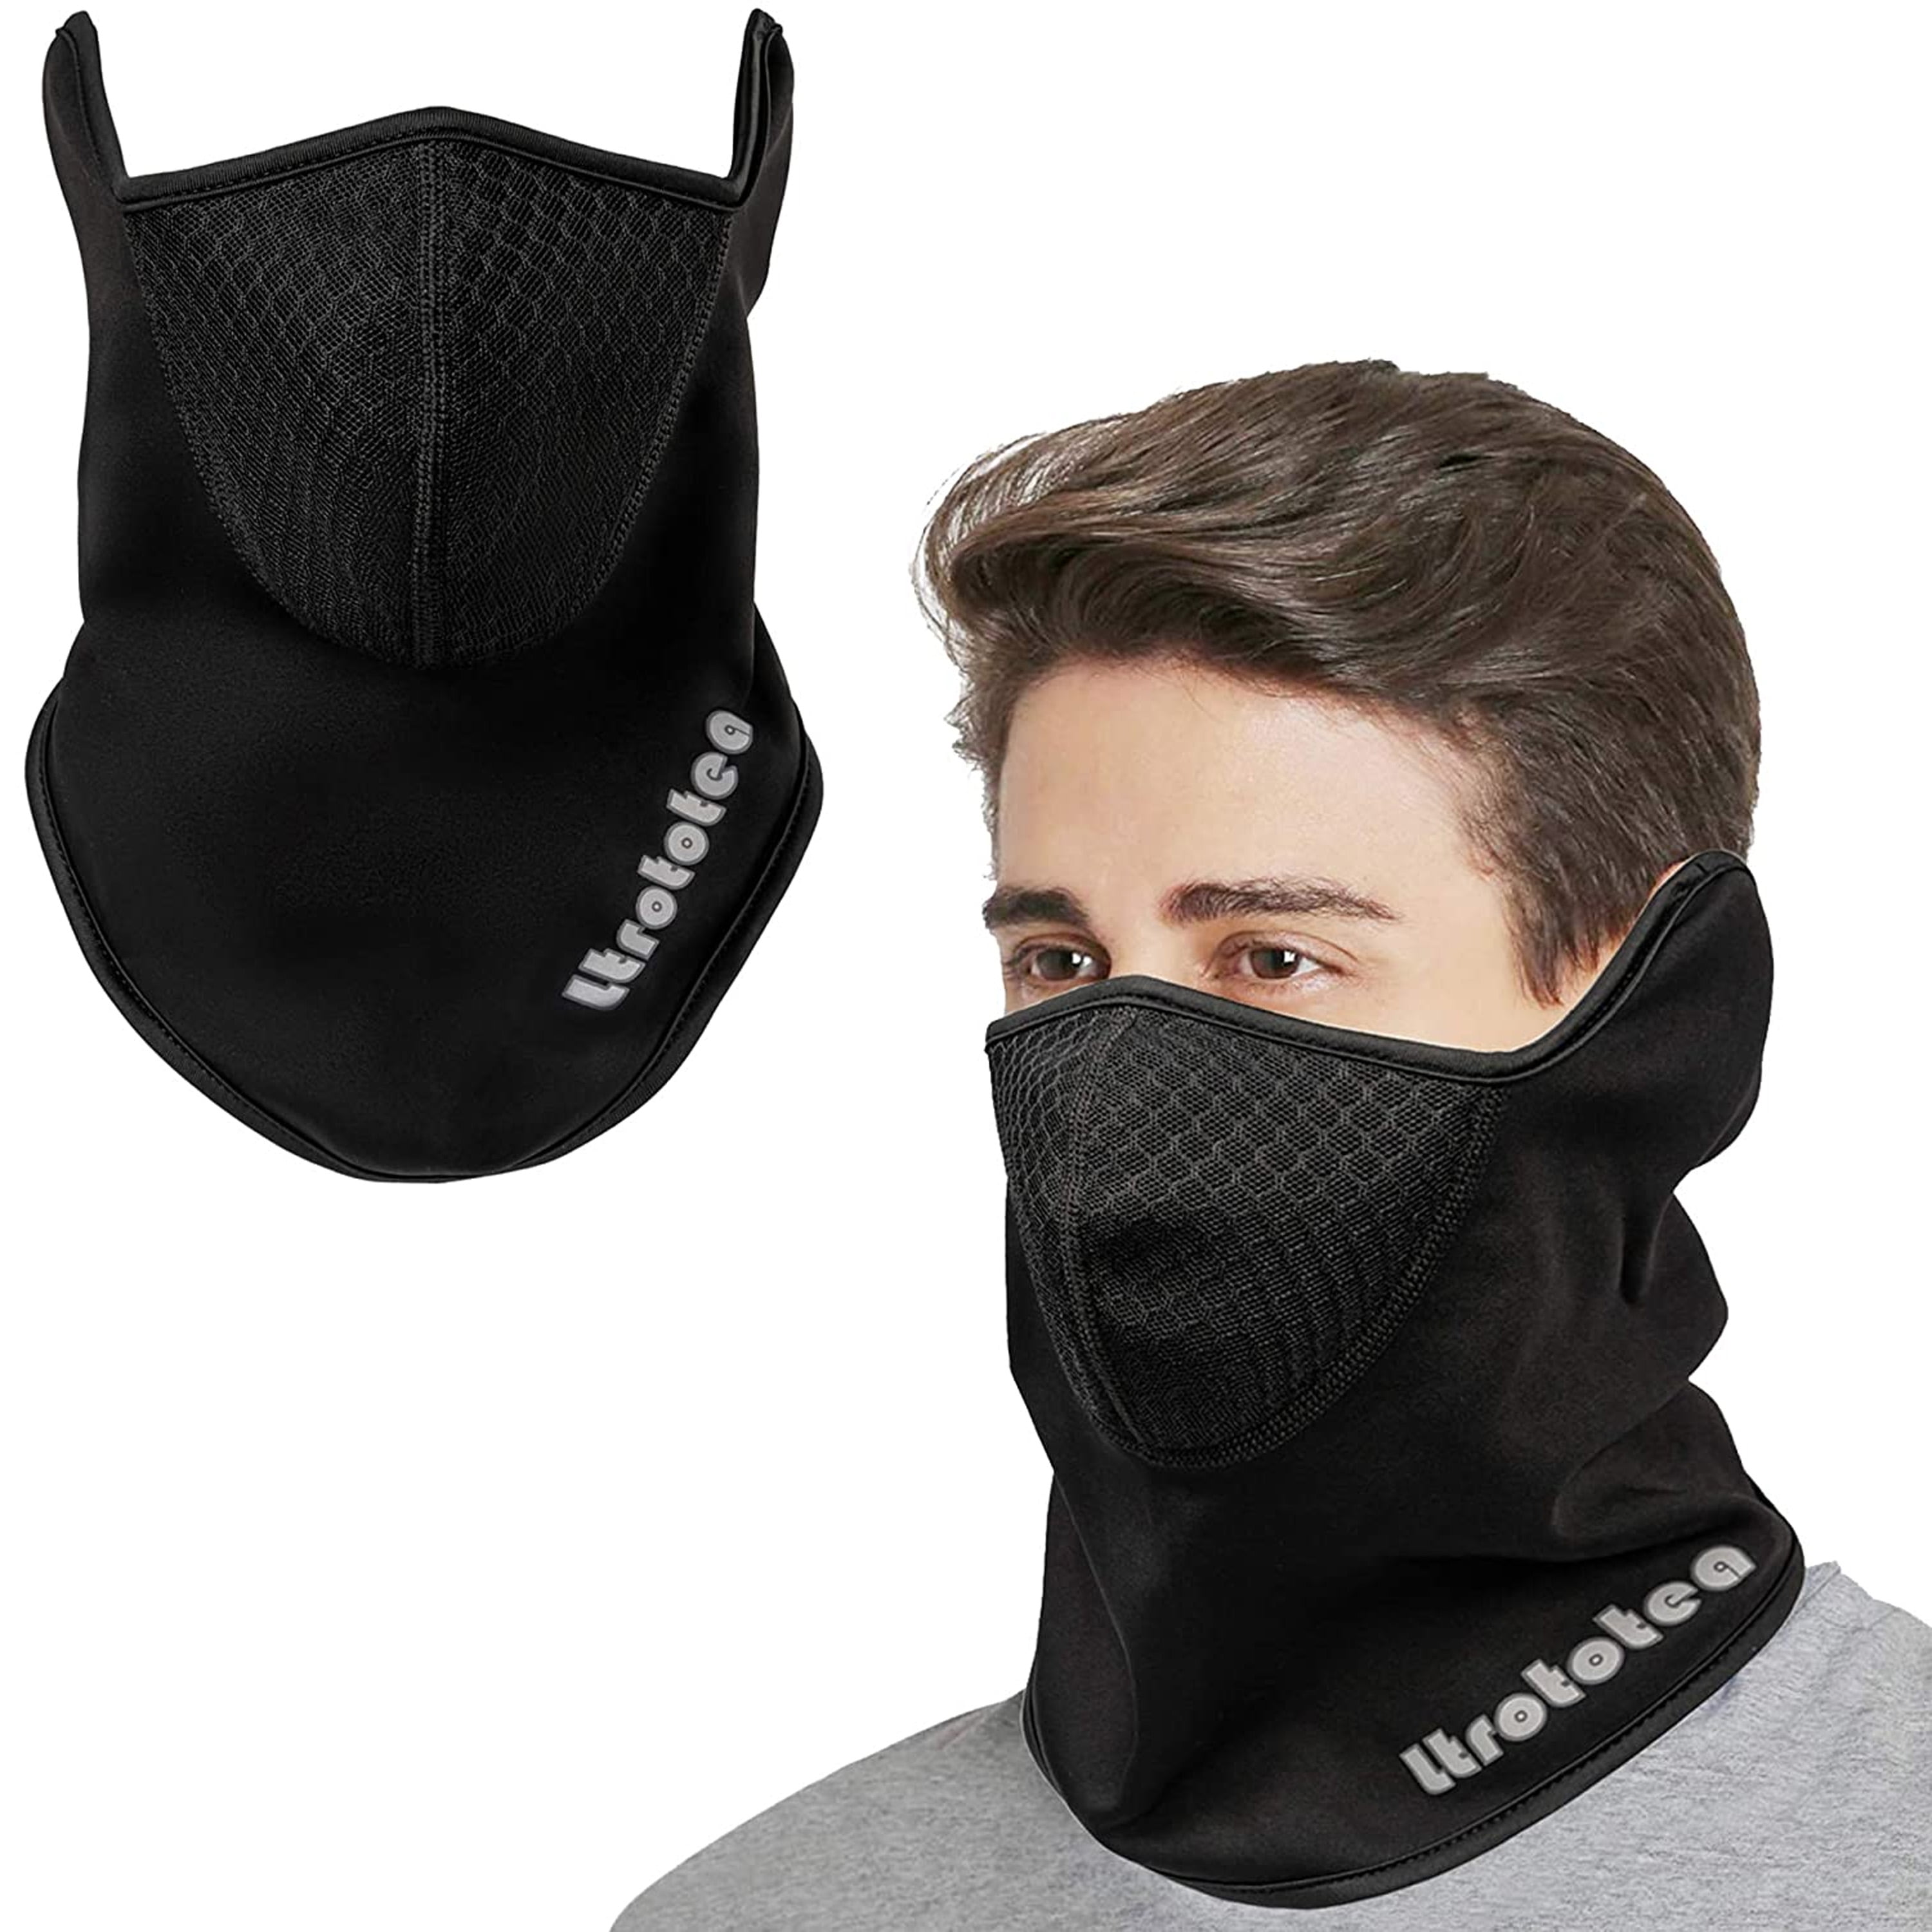 Winter Fleece Neck Warmer Gaiter Balaclava Ski Face Mask Scarf for Cold Weather 